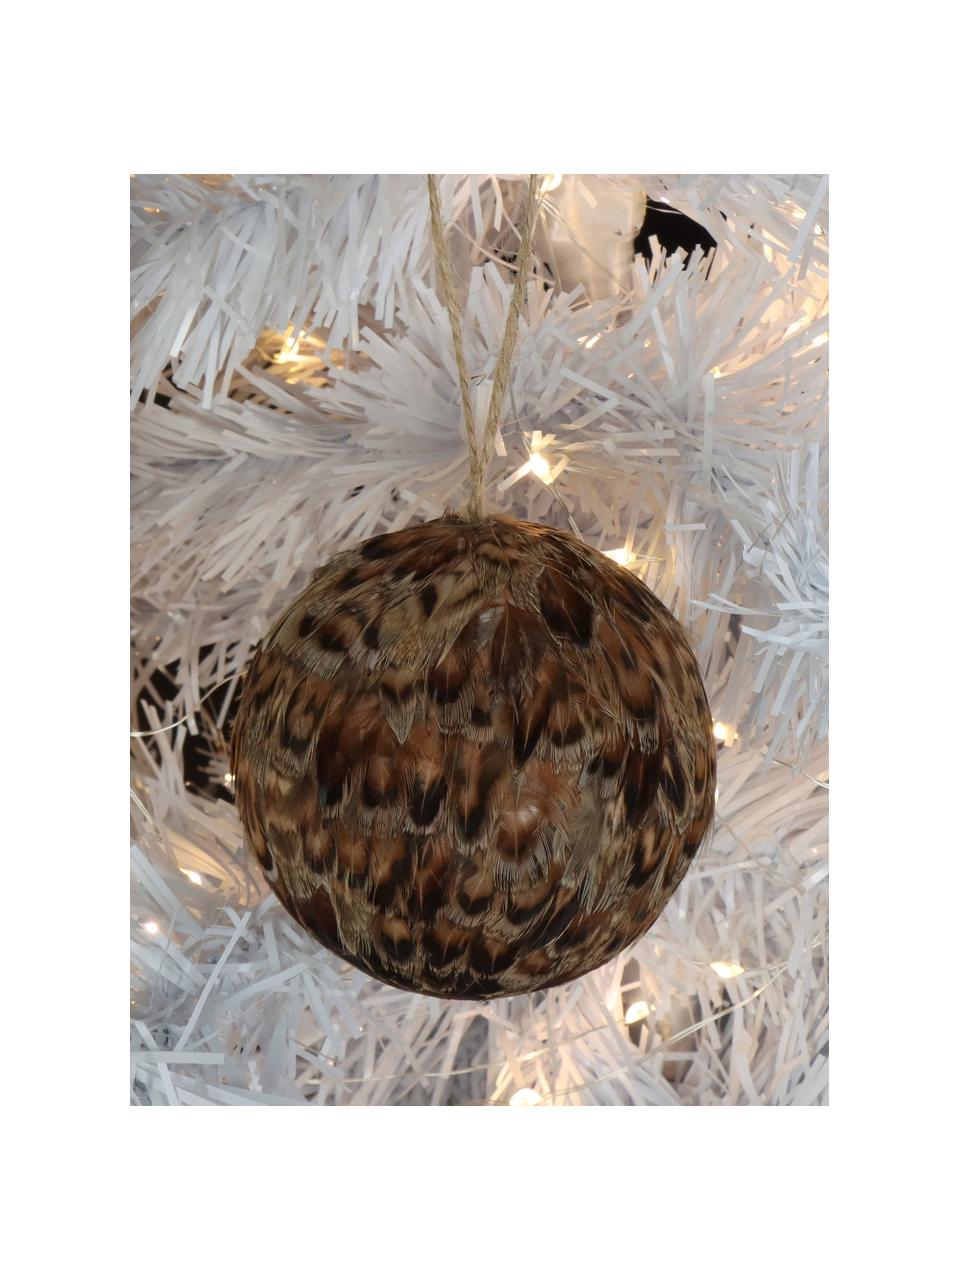 Kerstboomhanger Feather Ball, 2 stuks, Veren, Bruintinten, Ø 8 cm